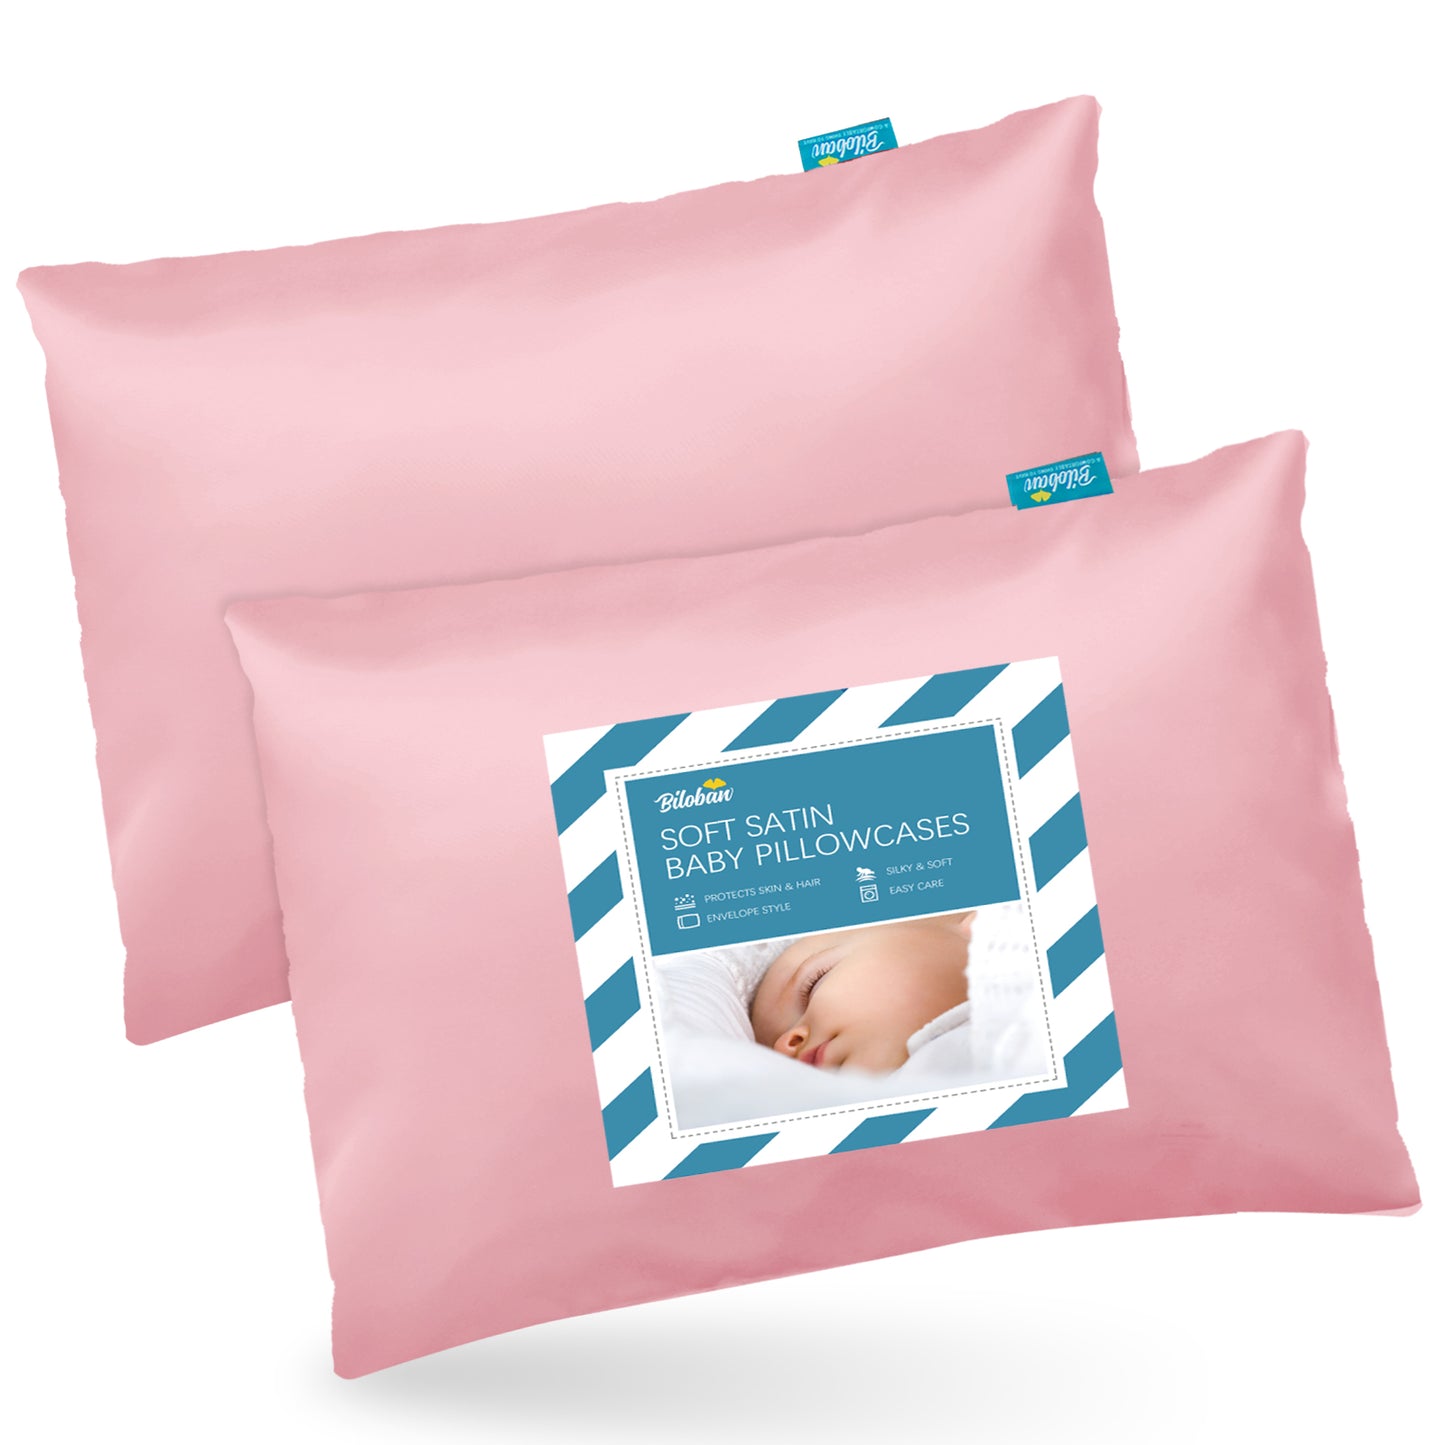 Toddler Pillowcase - 2 pack, 13" x18", Silky Soft Satin, Envelope Style, Pink - Biloban Online Store